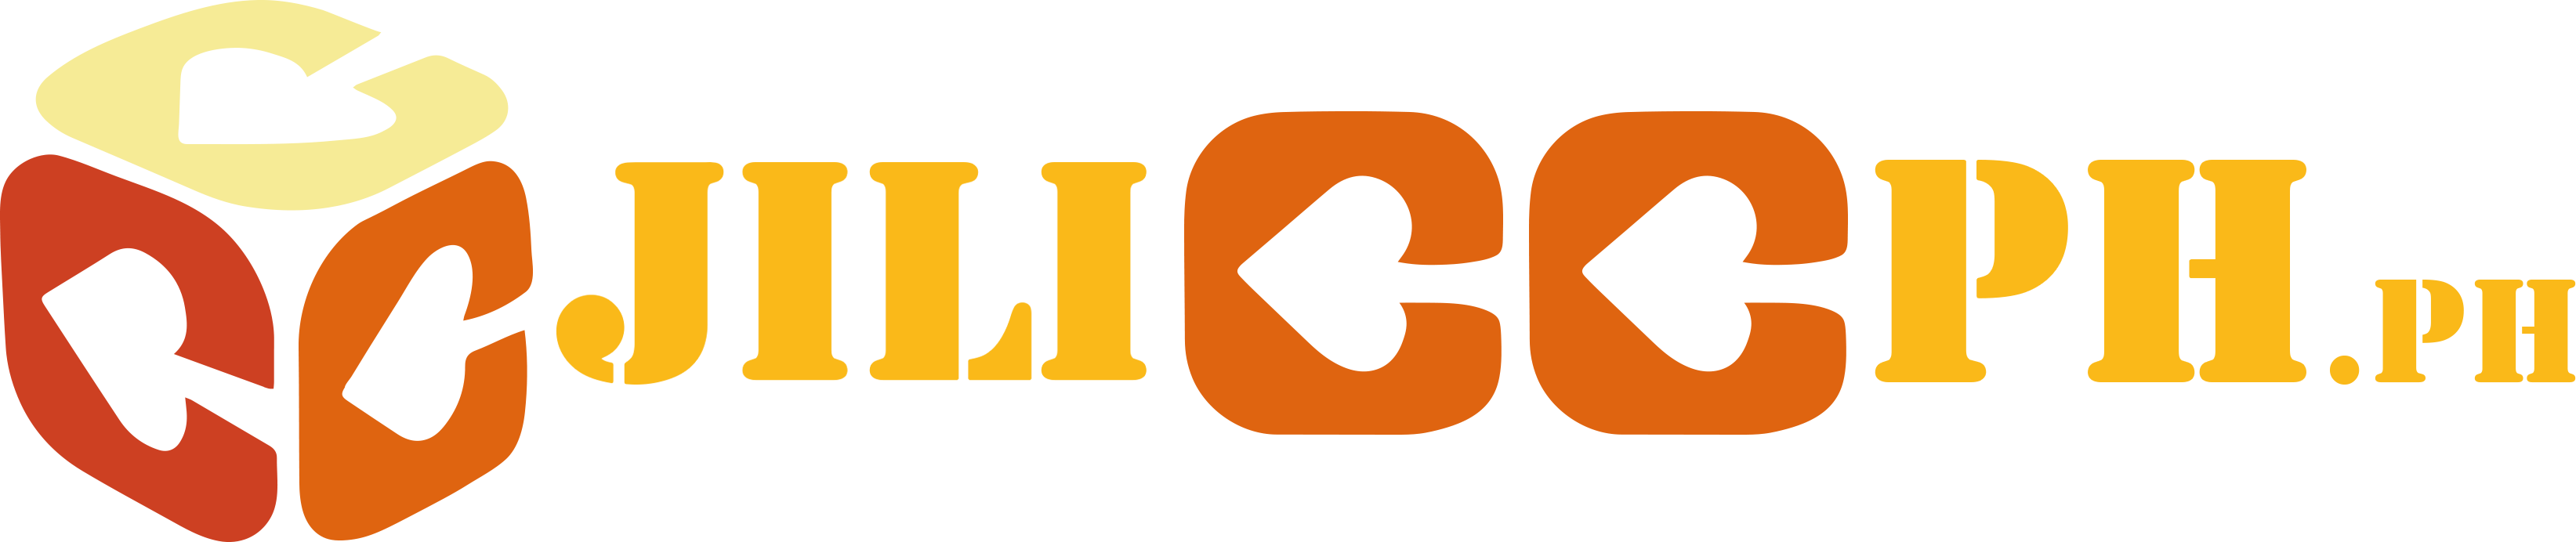 Jilicc logo